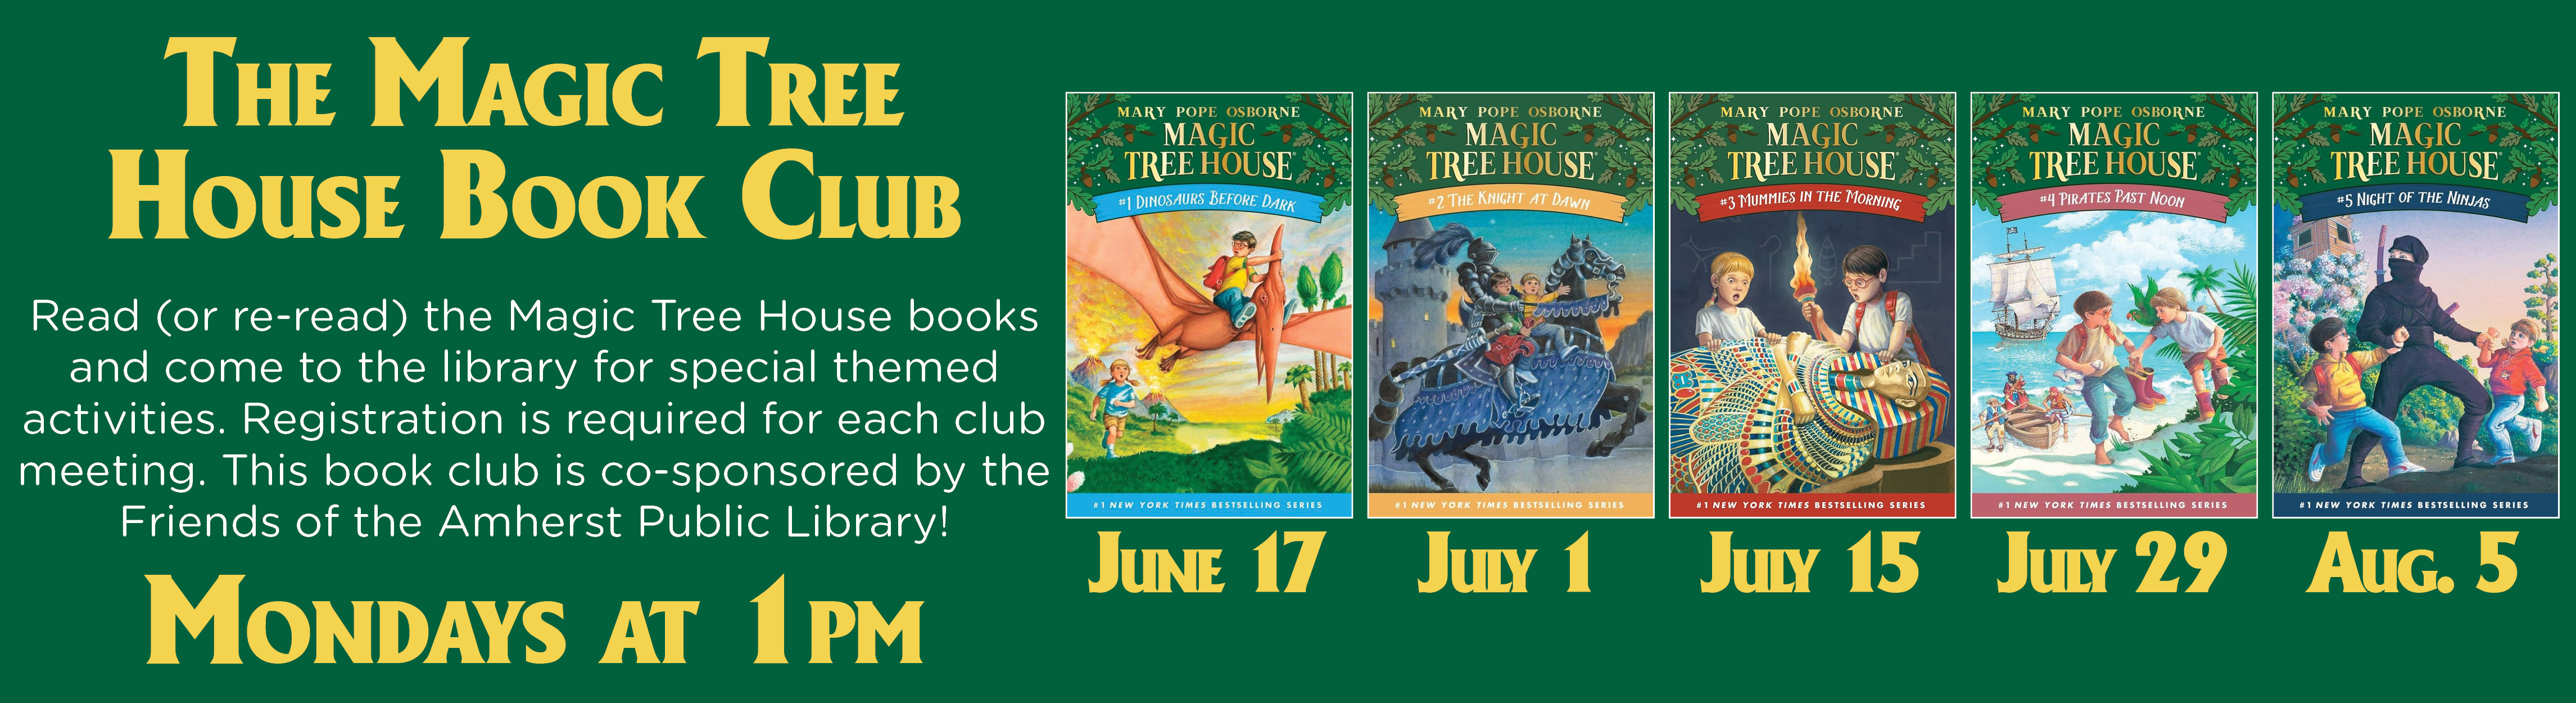 The Magic Tree House Book Club